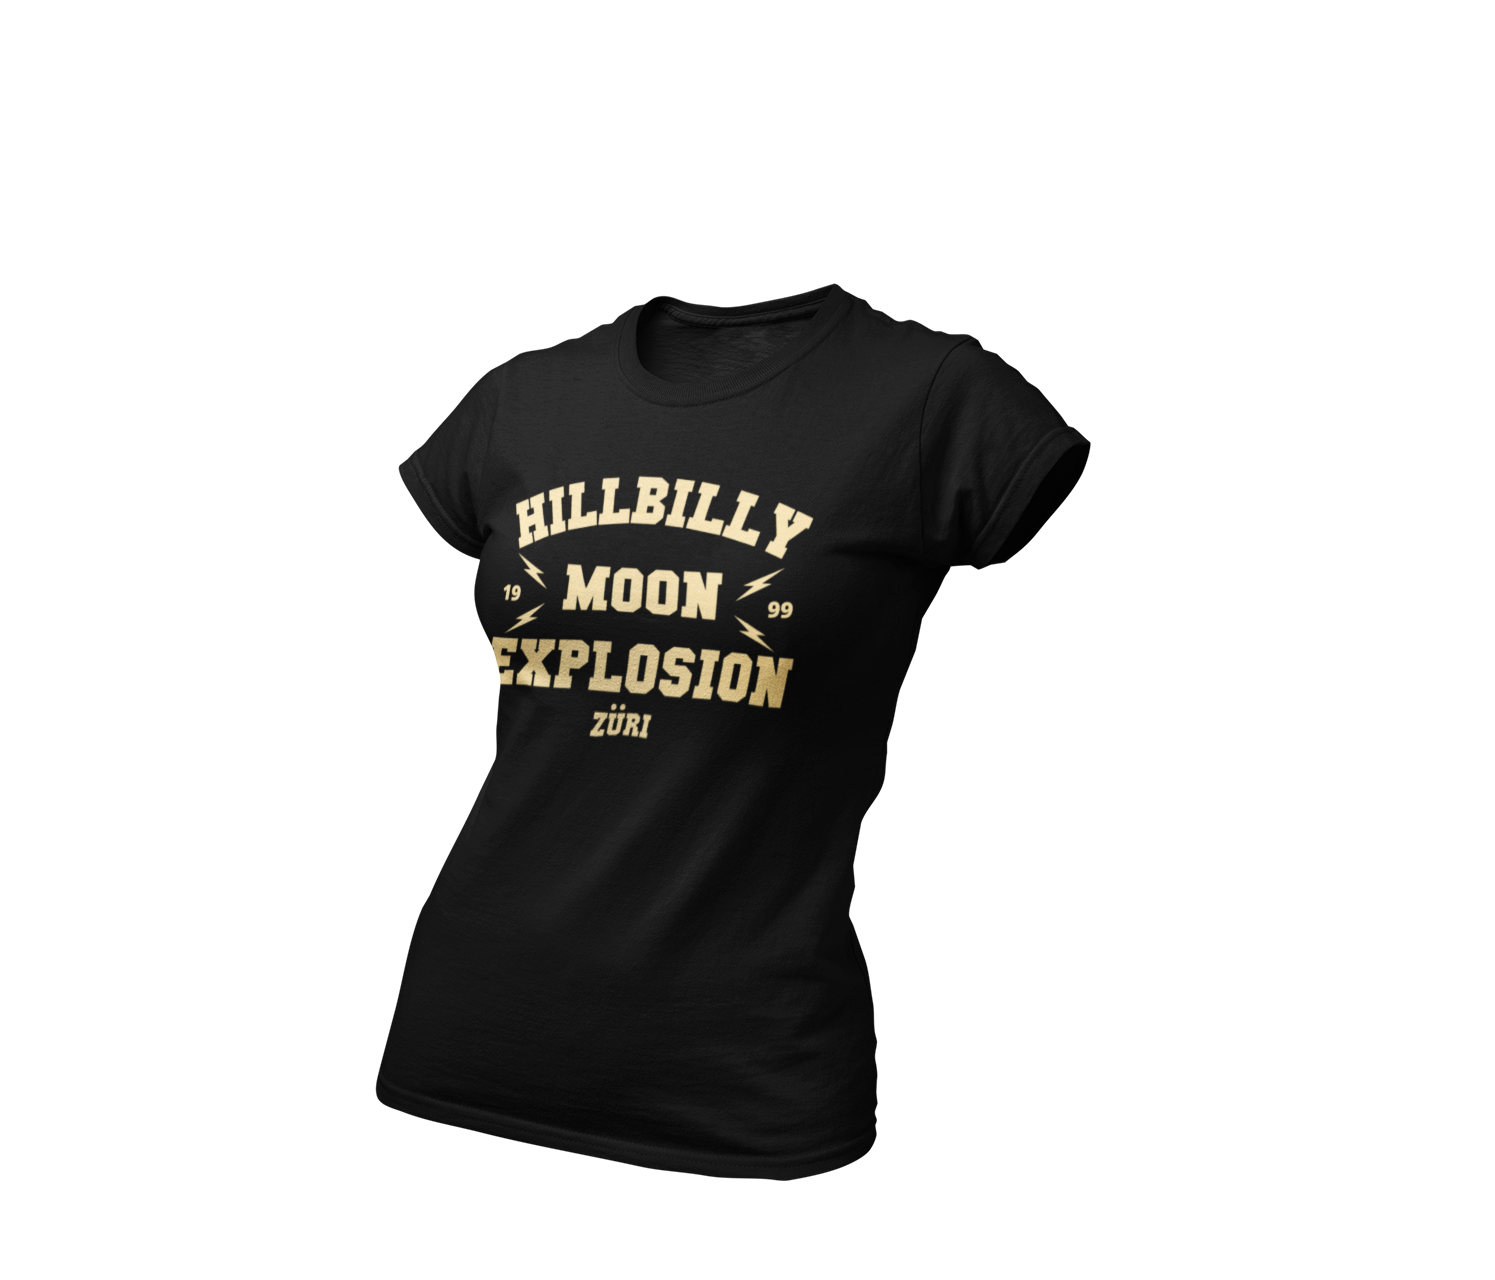 HILLBILLY MOON EXPLOSION "ZÜRI" tshirt for WOMEN